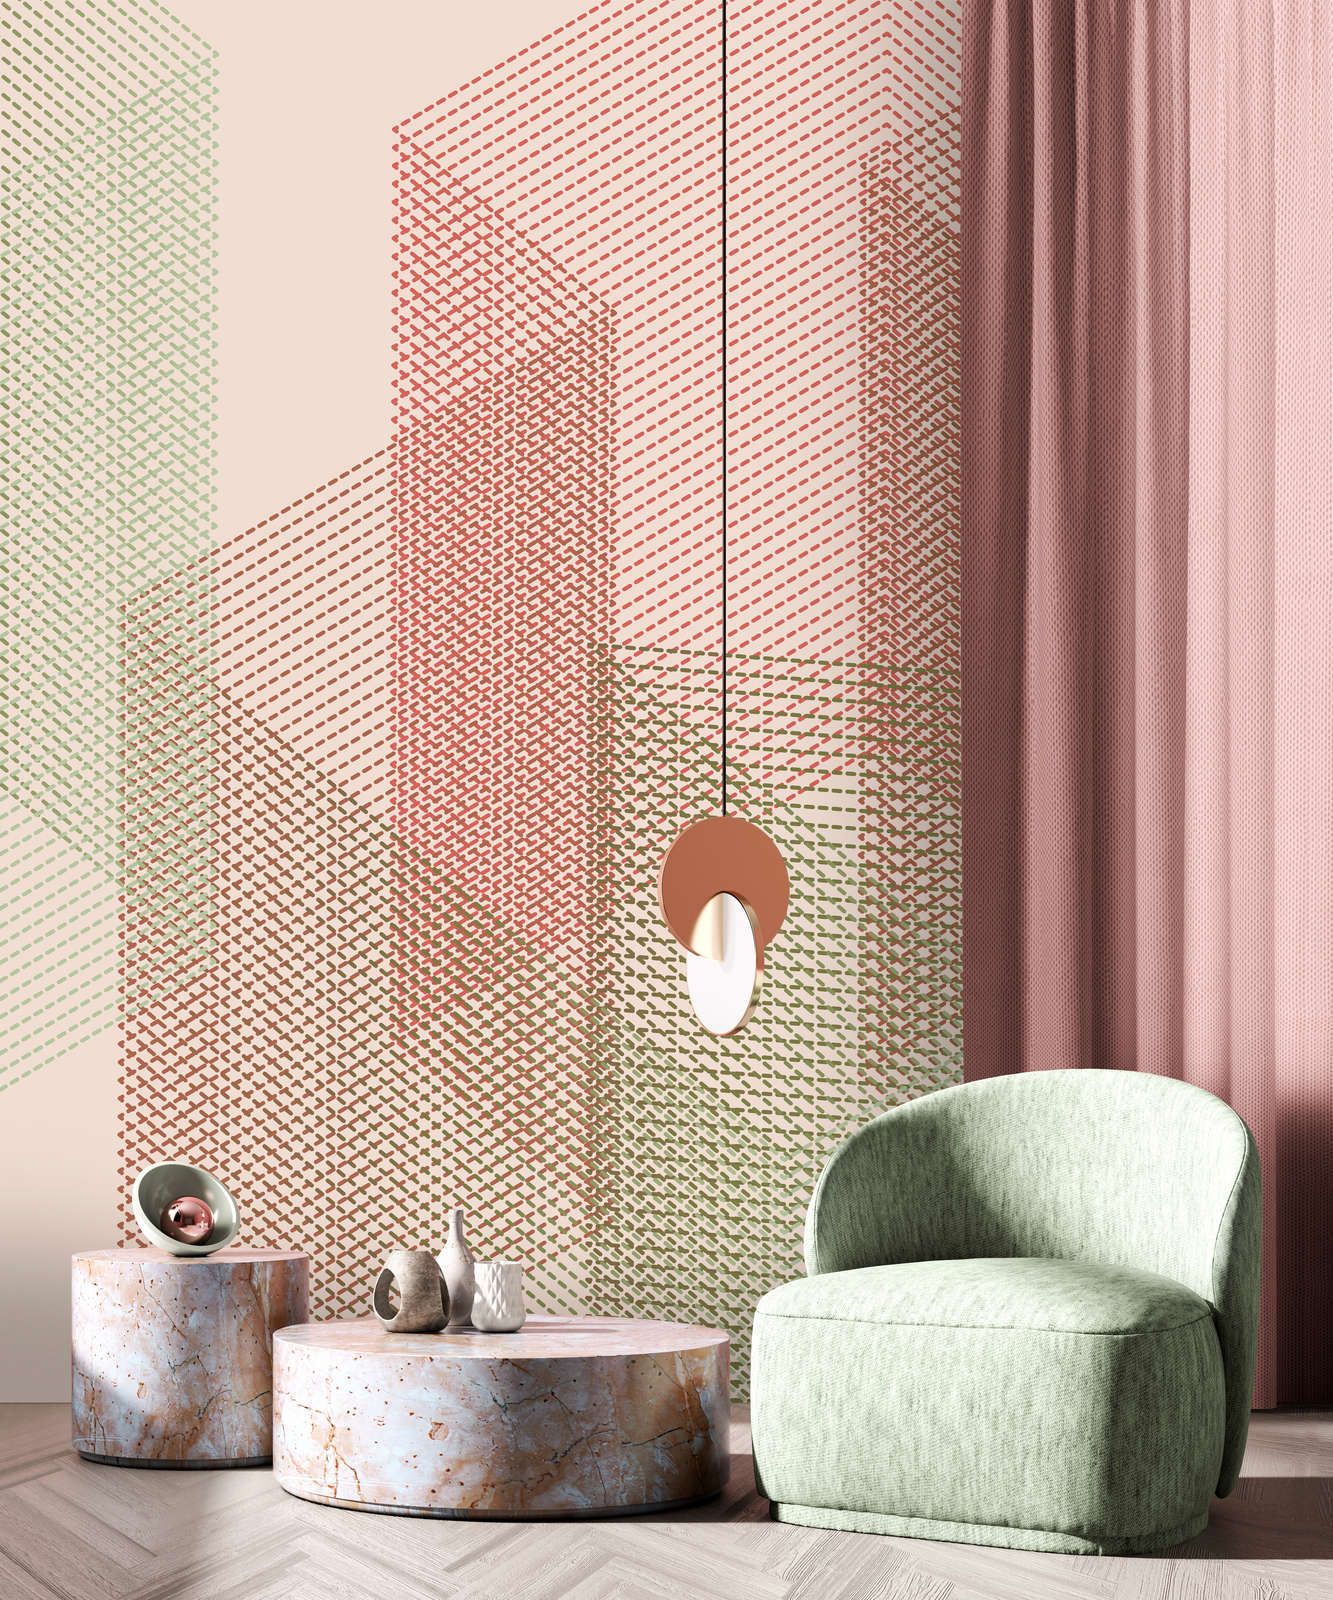             Photo wallpaper »mesh 2« - Abstract 3D design - Red, Green | Light textured non-woven
        